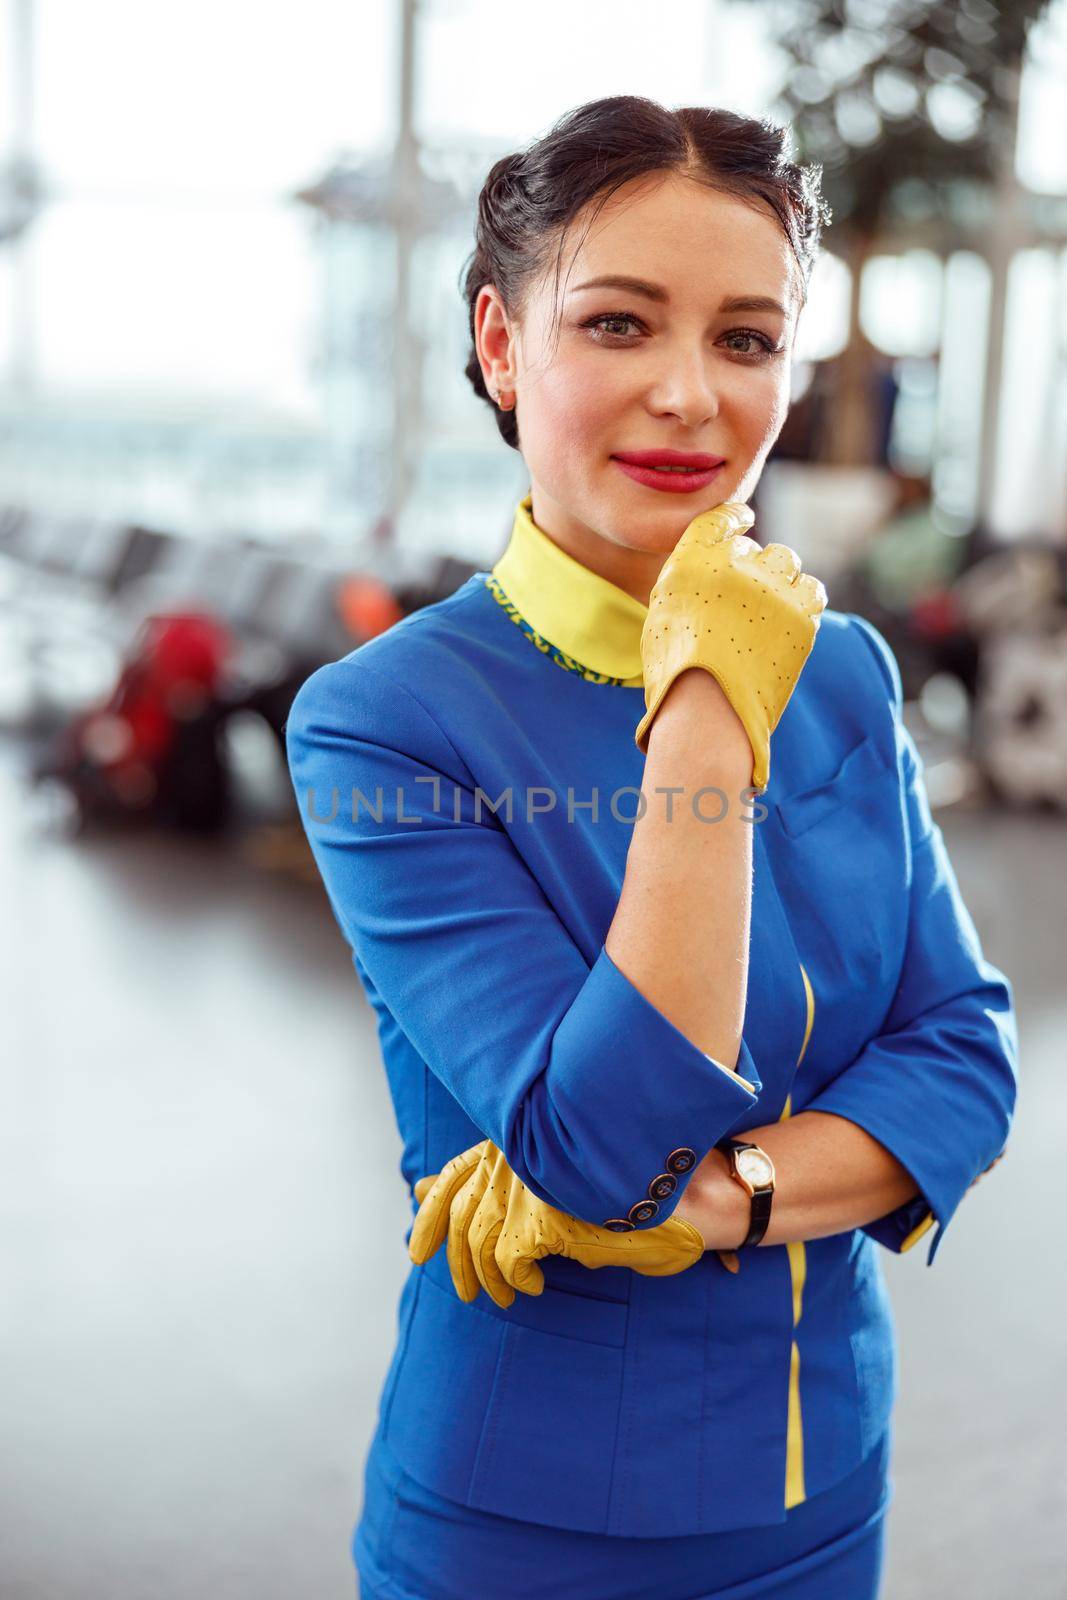 Female flight attendant standing in airport terminal by Yaroslav_astakhov